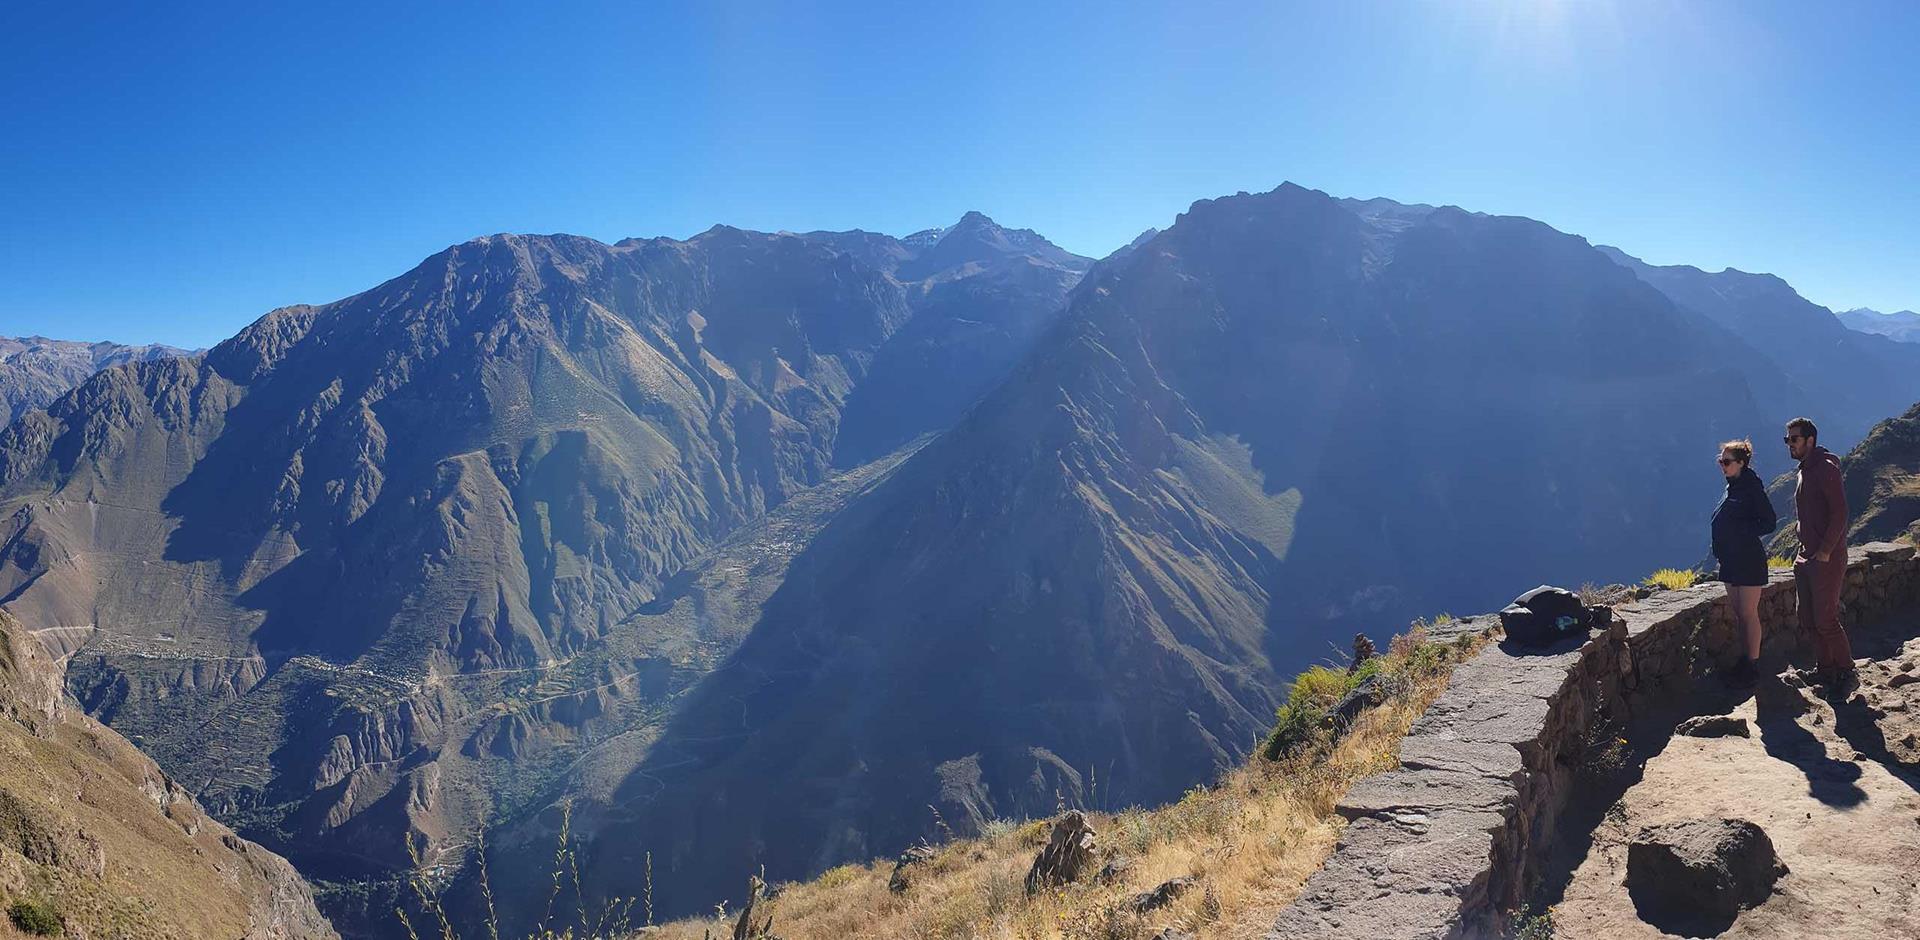 Peru's Colca Canyon